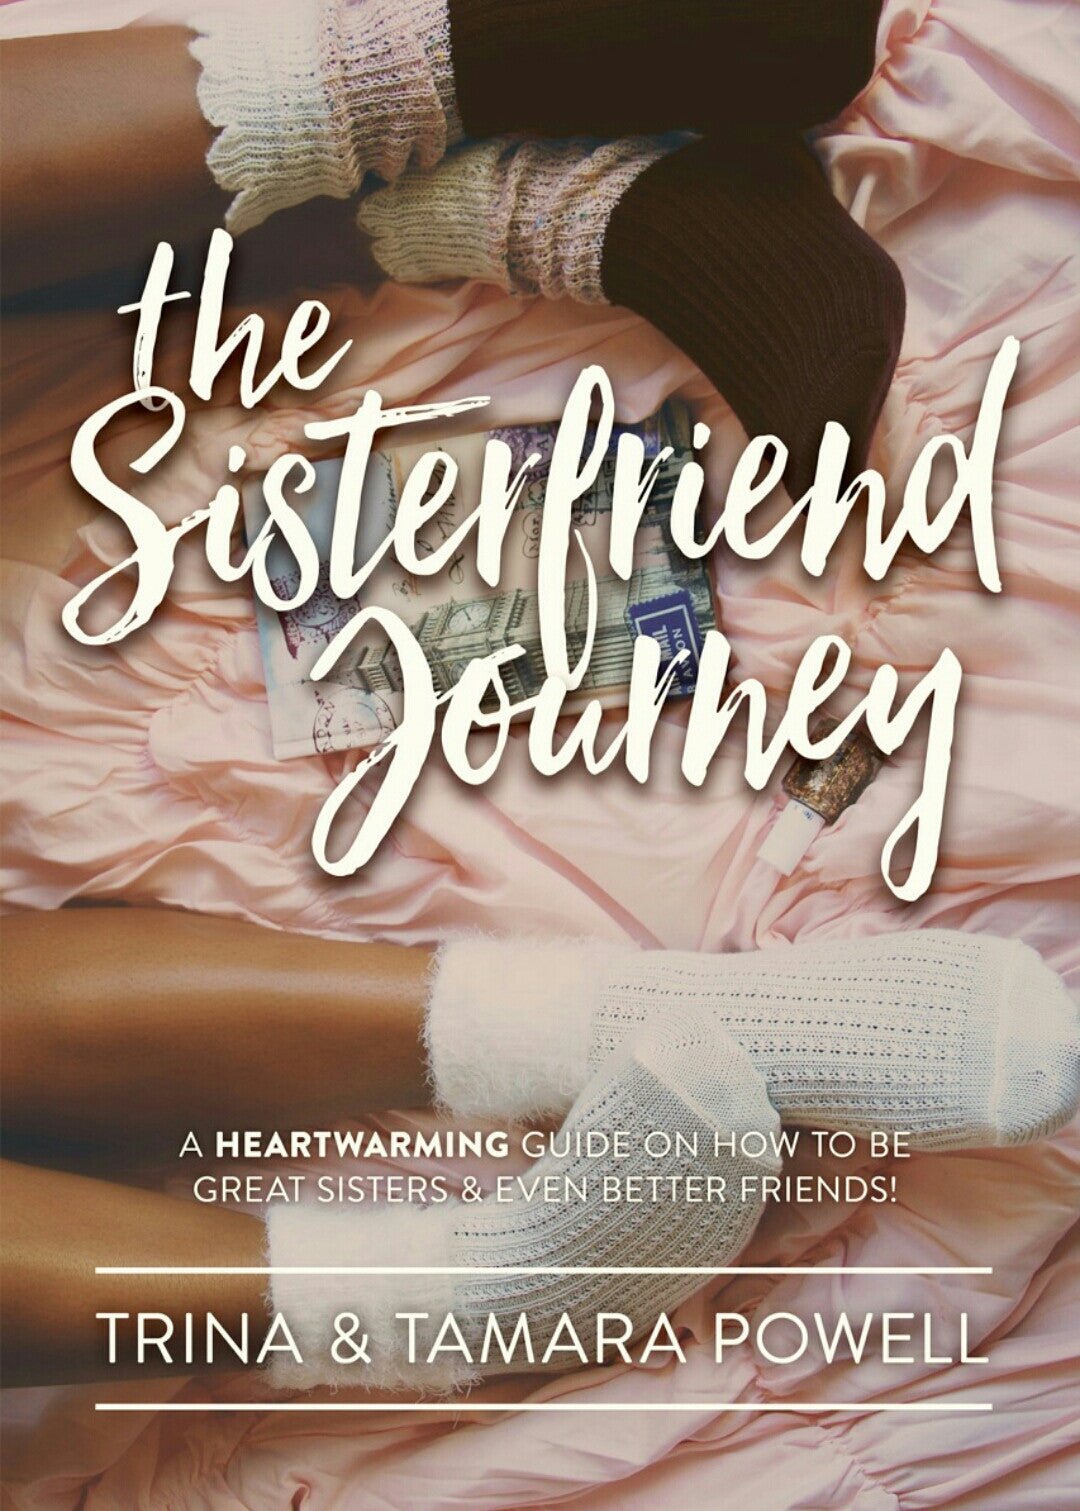 Sisterhood in Business - ONE®